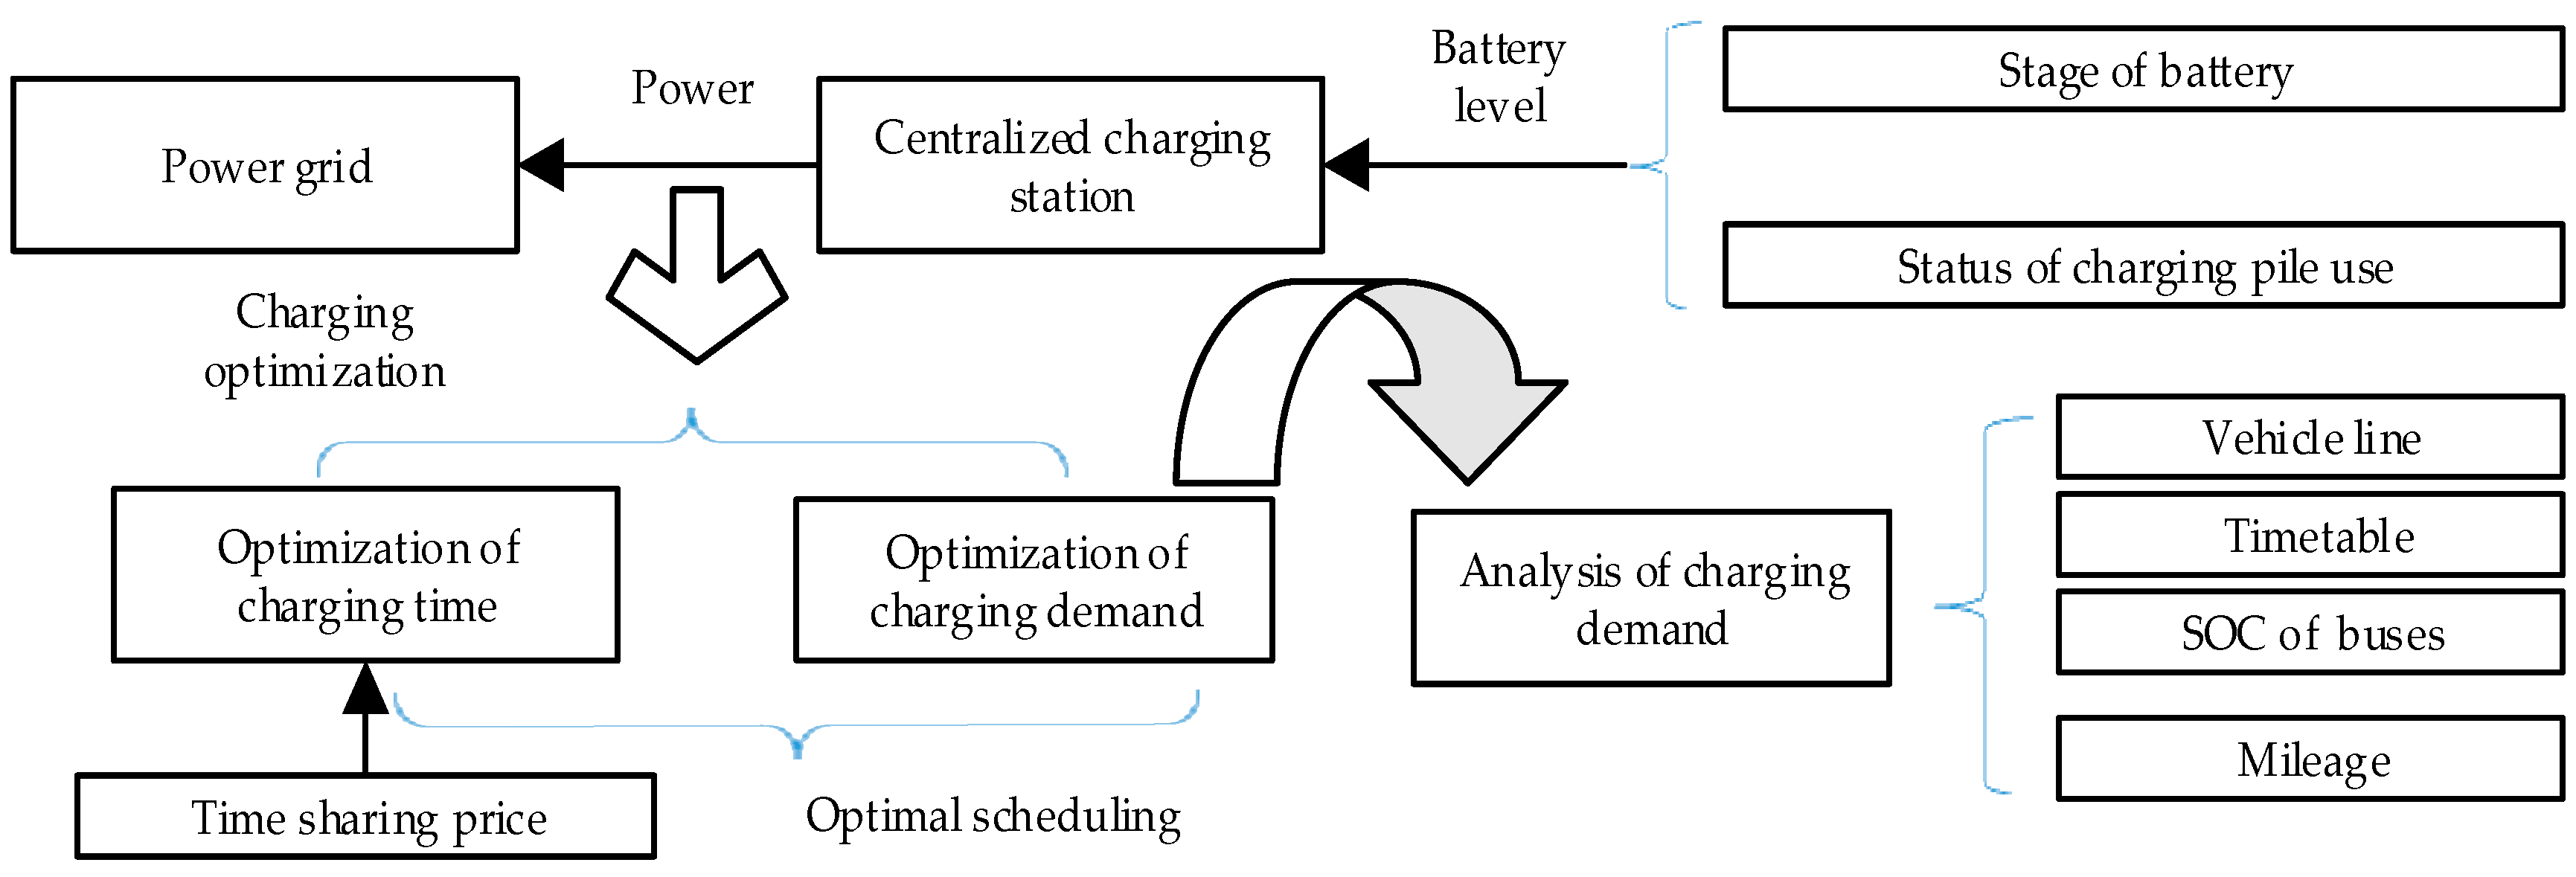 Battery Mhos Chart